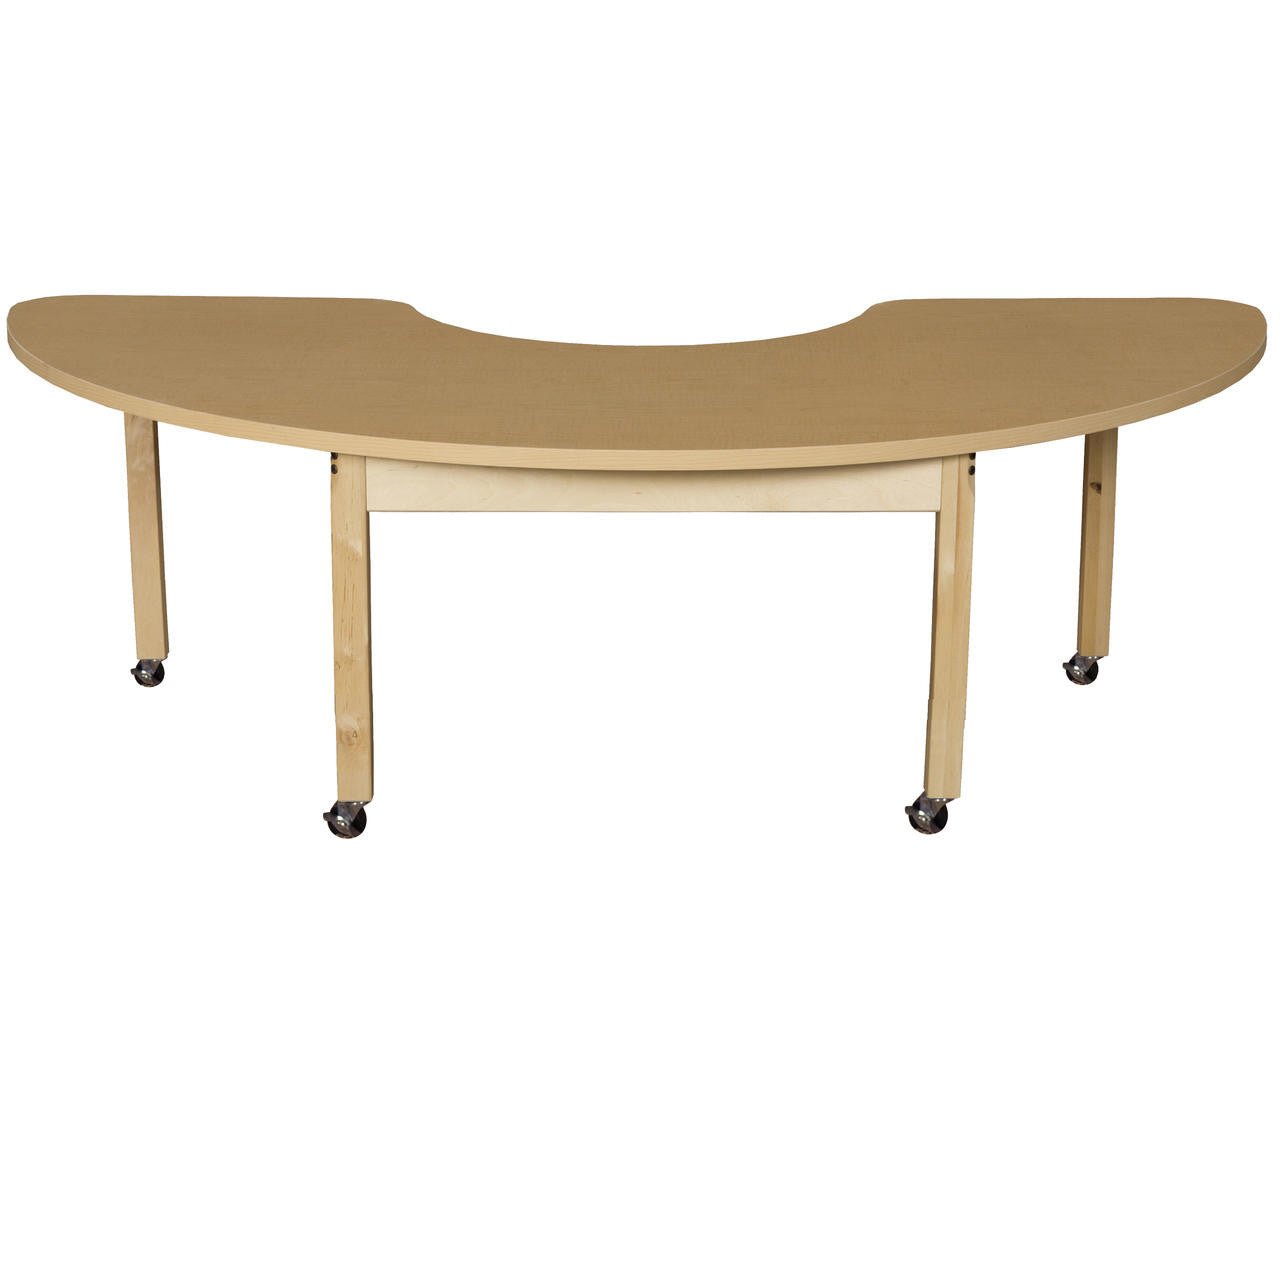 Mobile Half Circle High Pressure Laminate Table with Hardwood Legs - 20